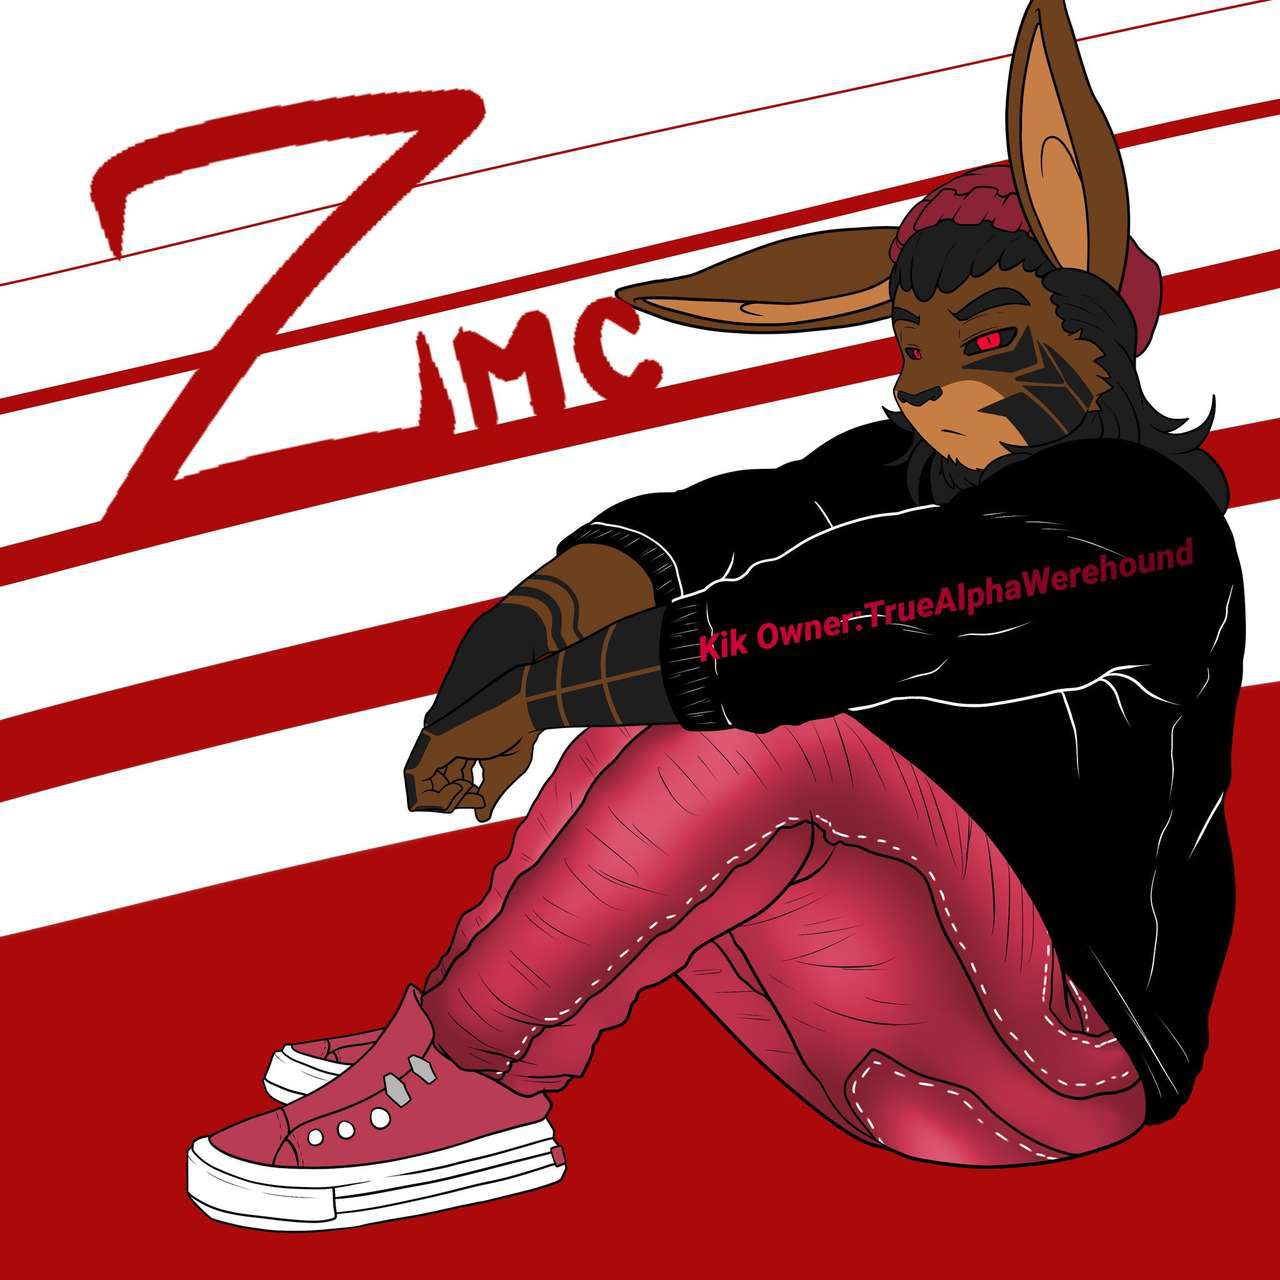 Artist - Zmc (zeromccall) [Tw] 744